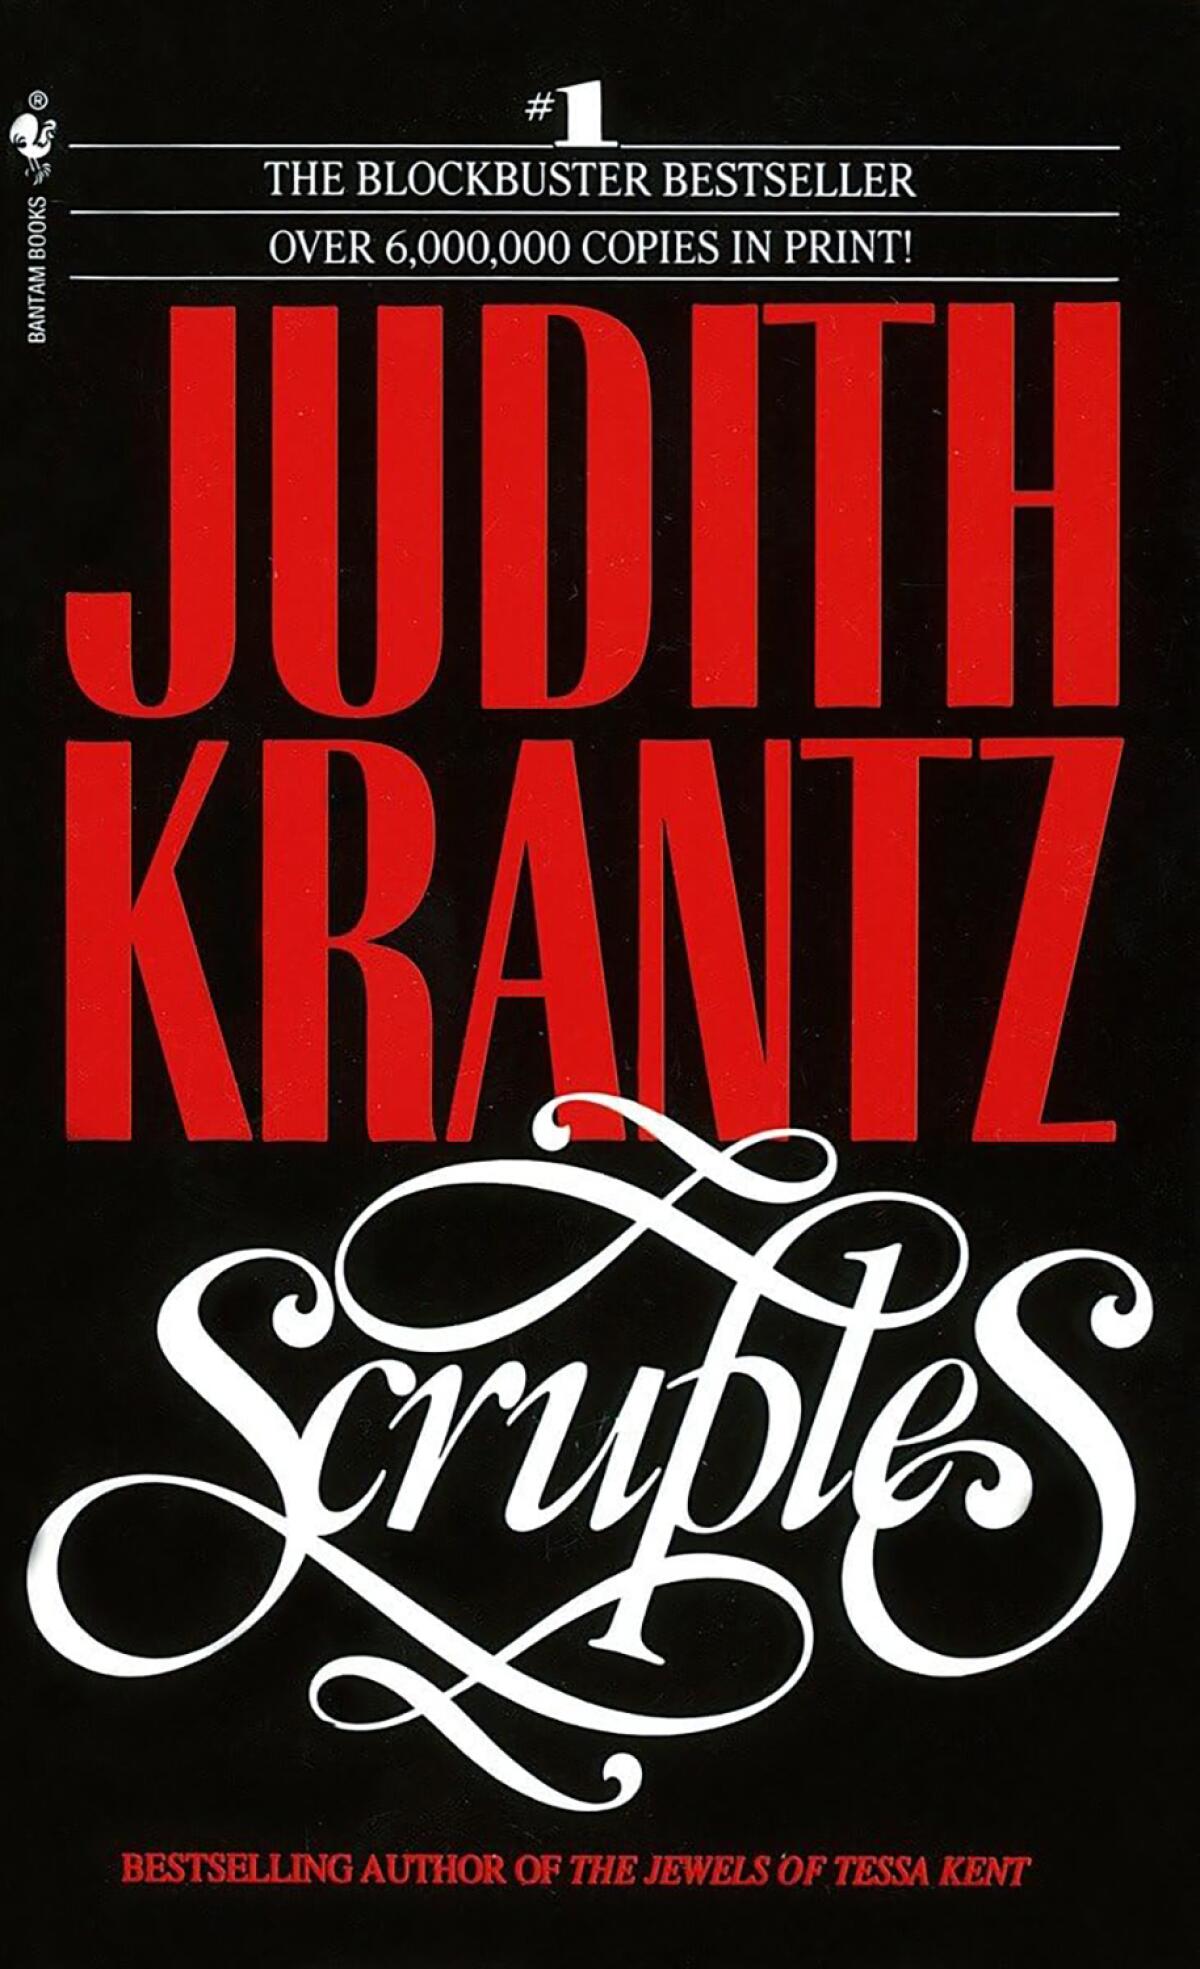 "Scruples" by Judith Krantz, 1978